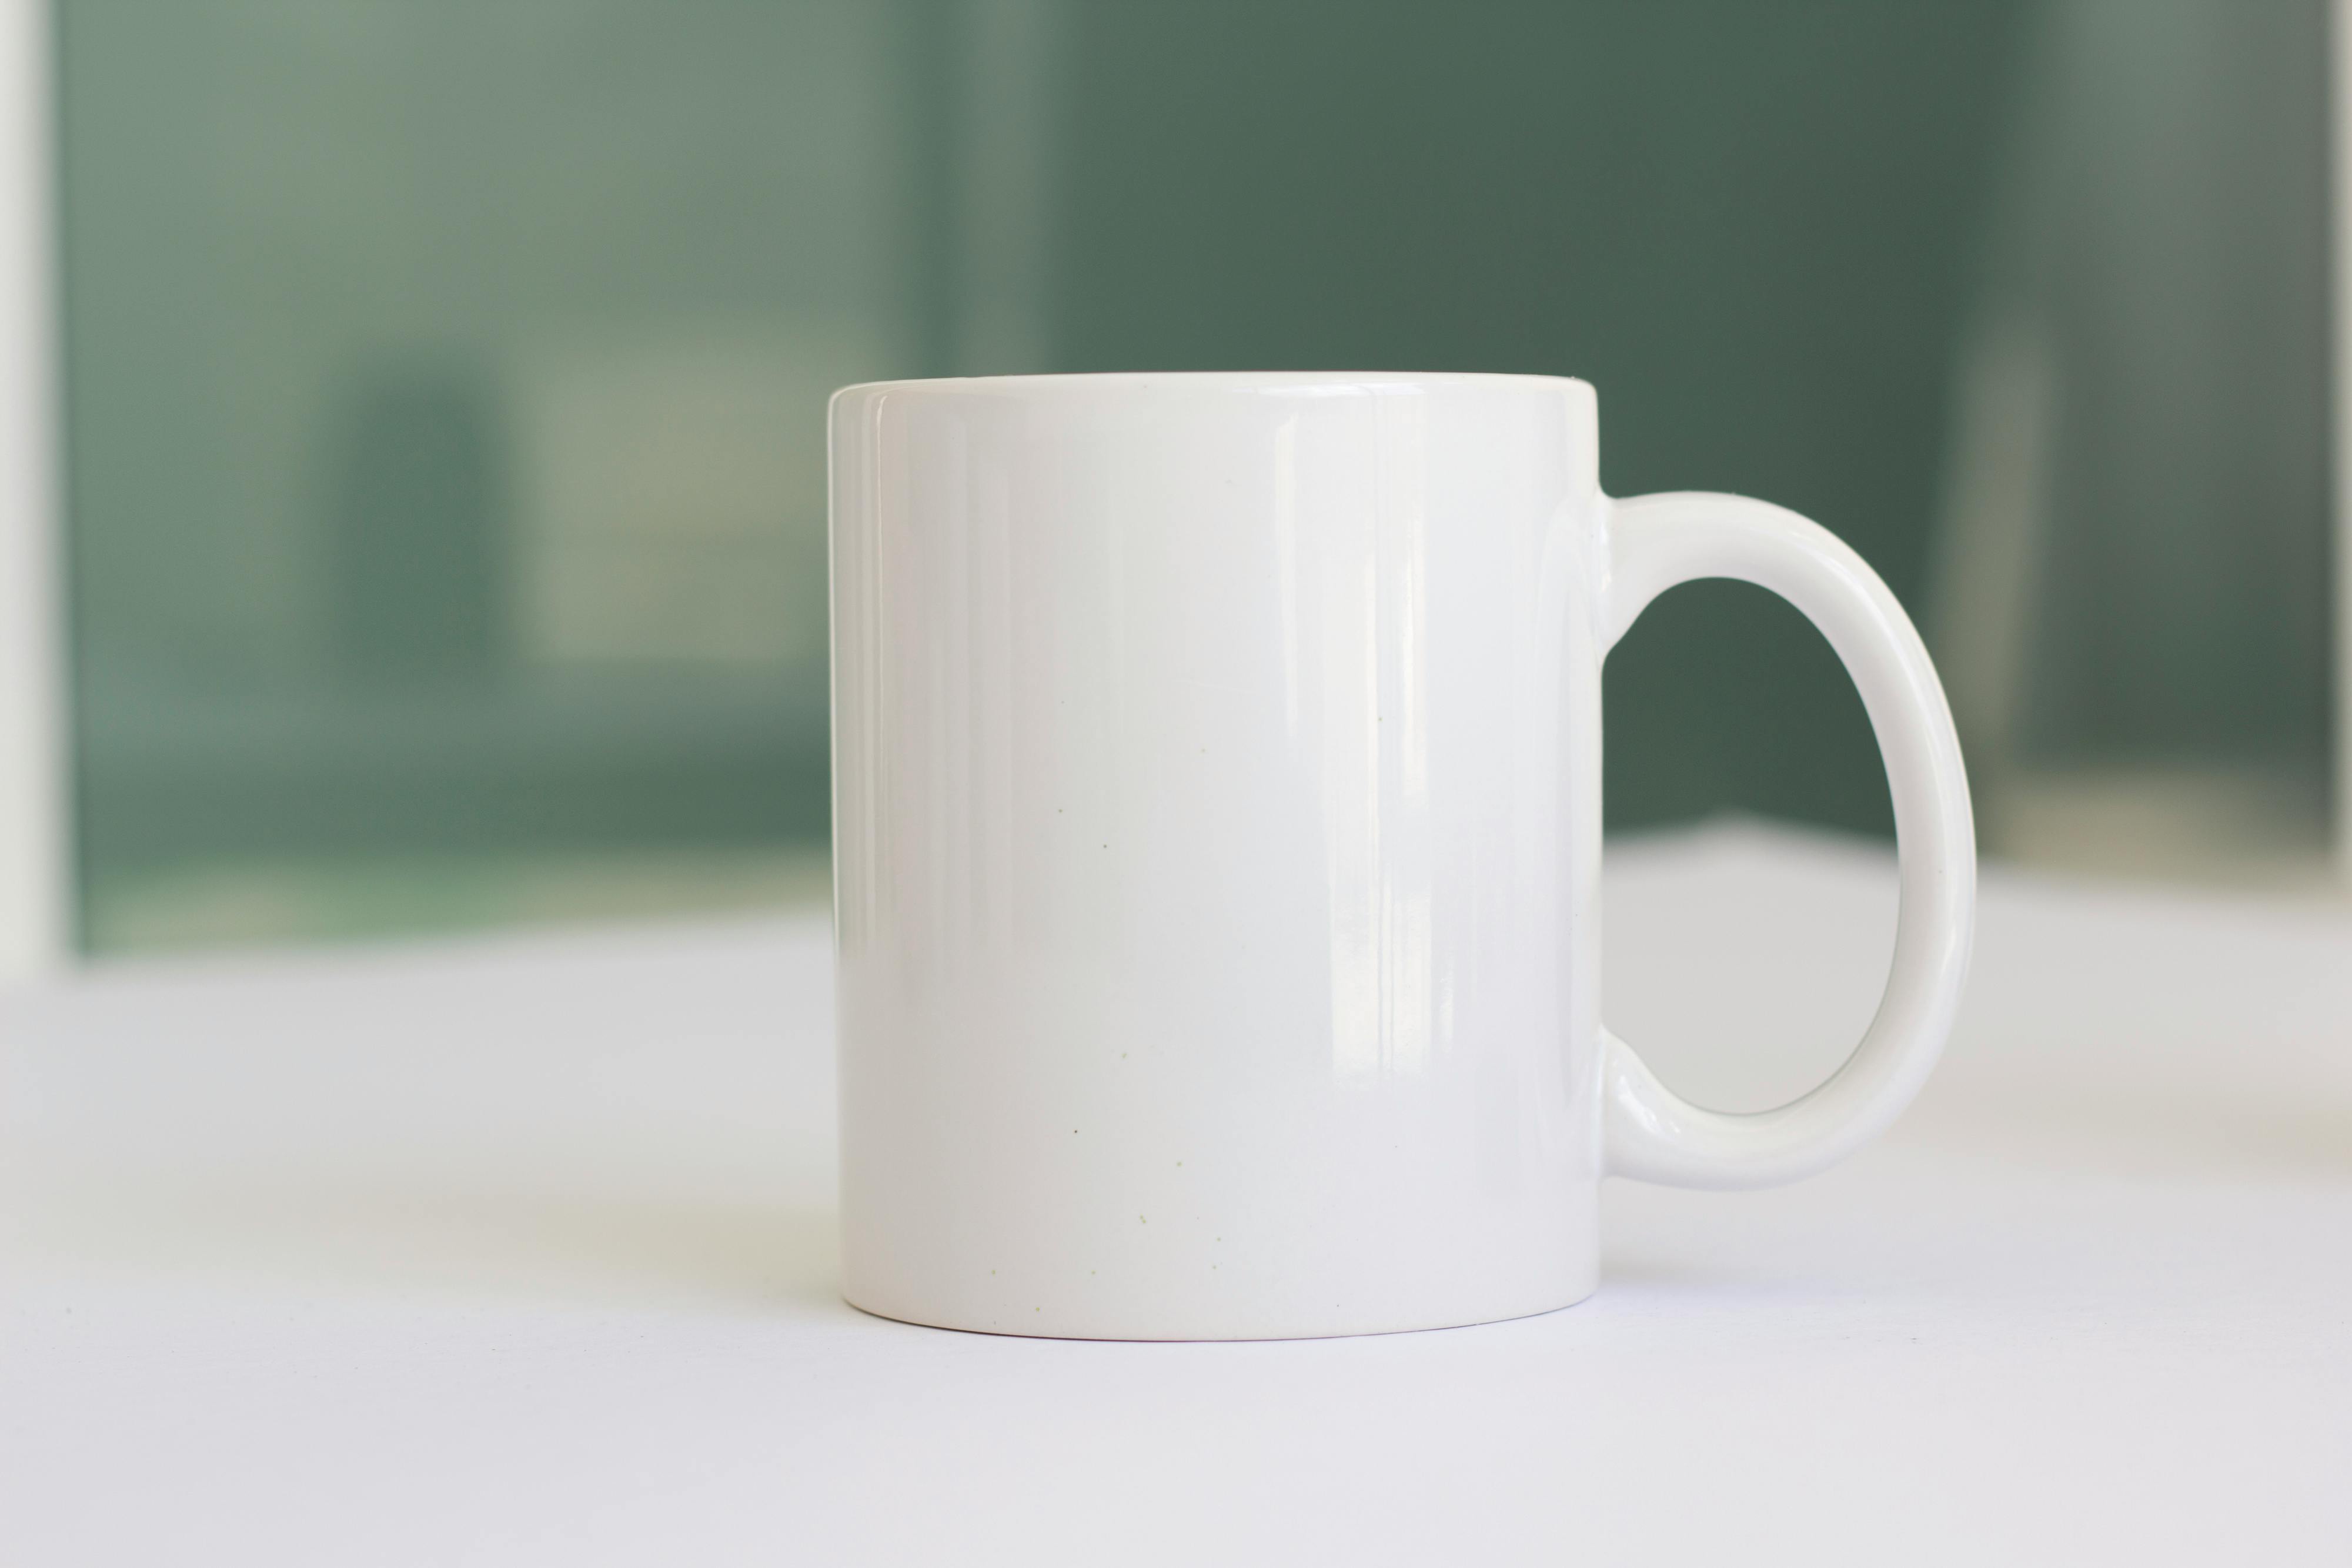 White ceramic mug with coffee on book page photo – Free Coffee cup Image on  Unsplash